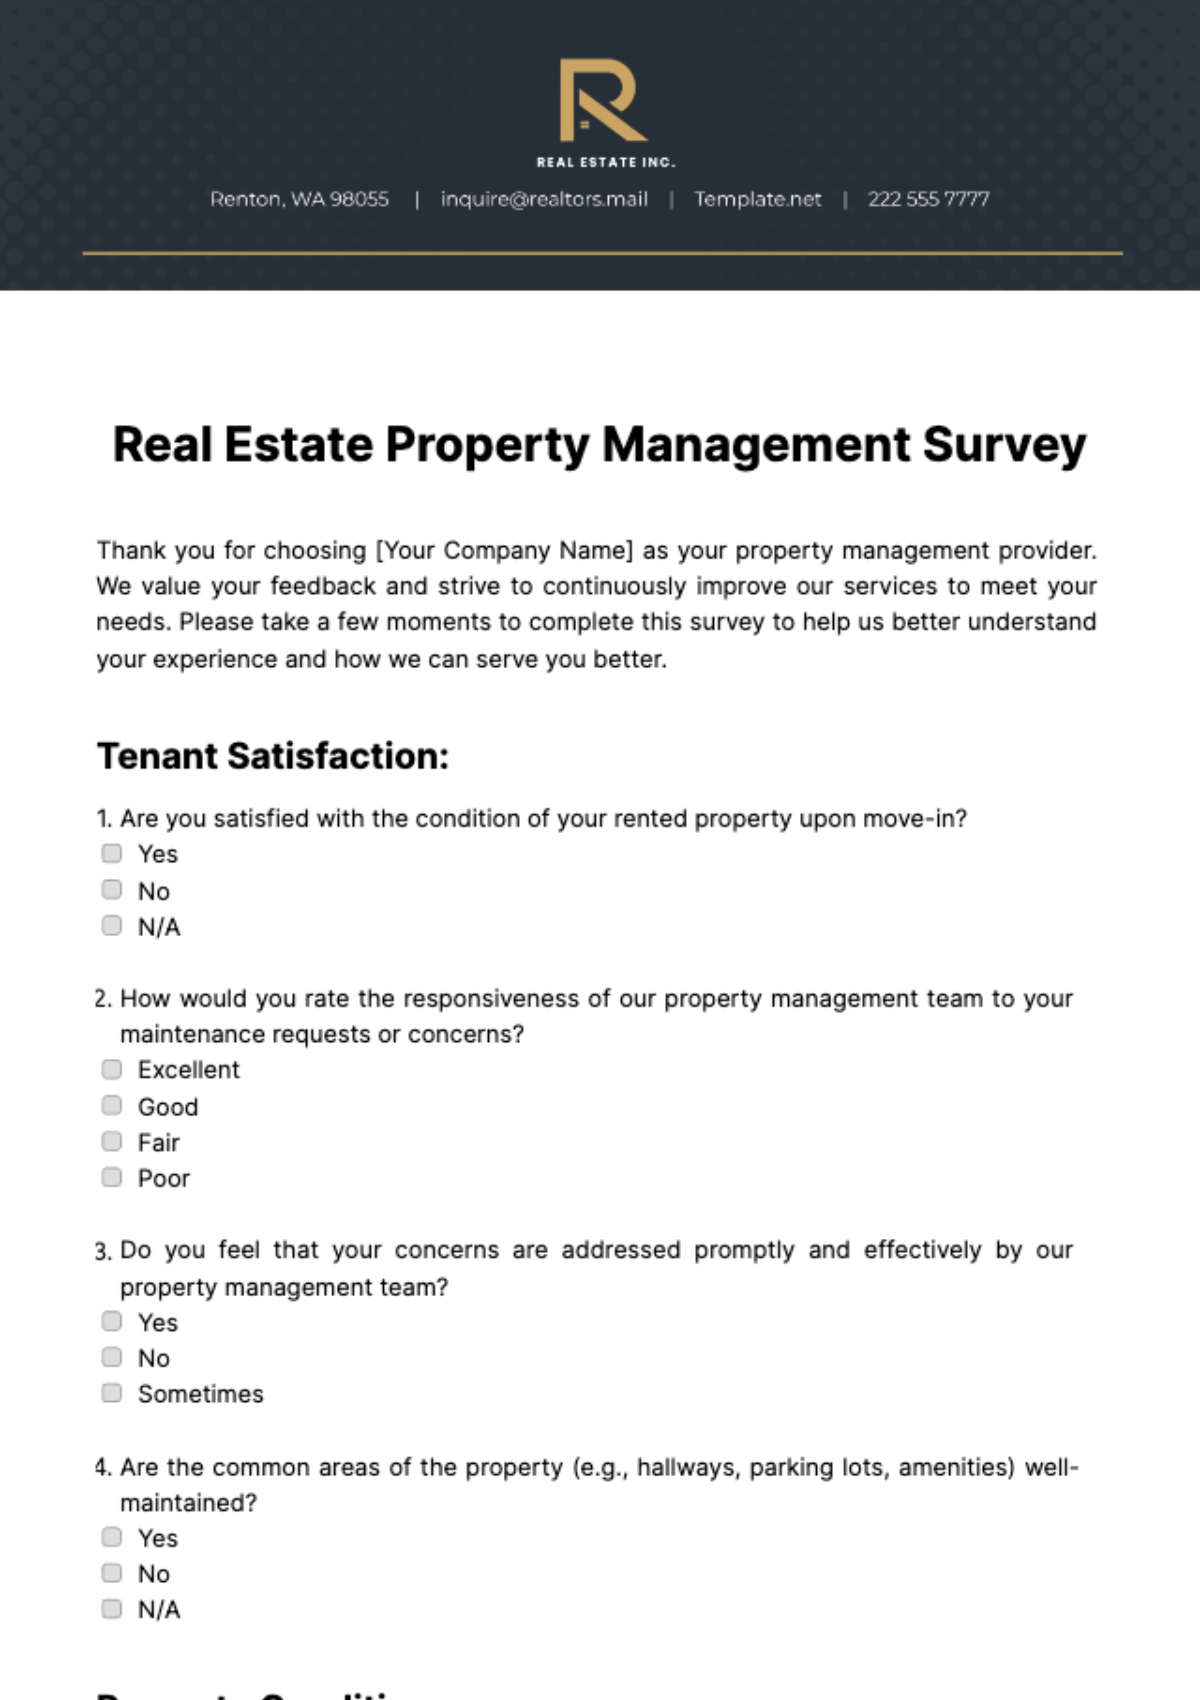 Real Estate Property Management Survey Template